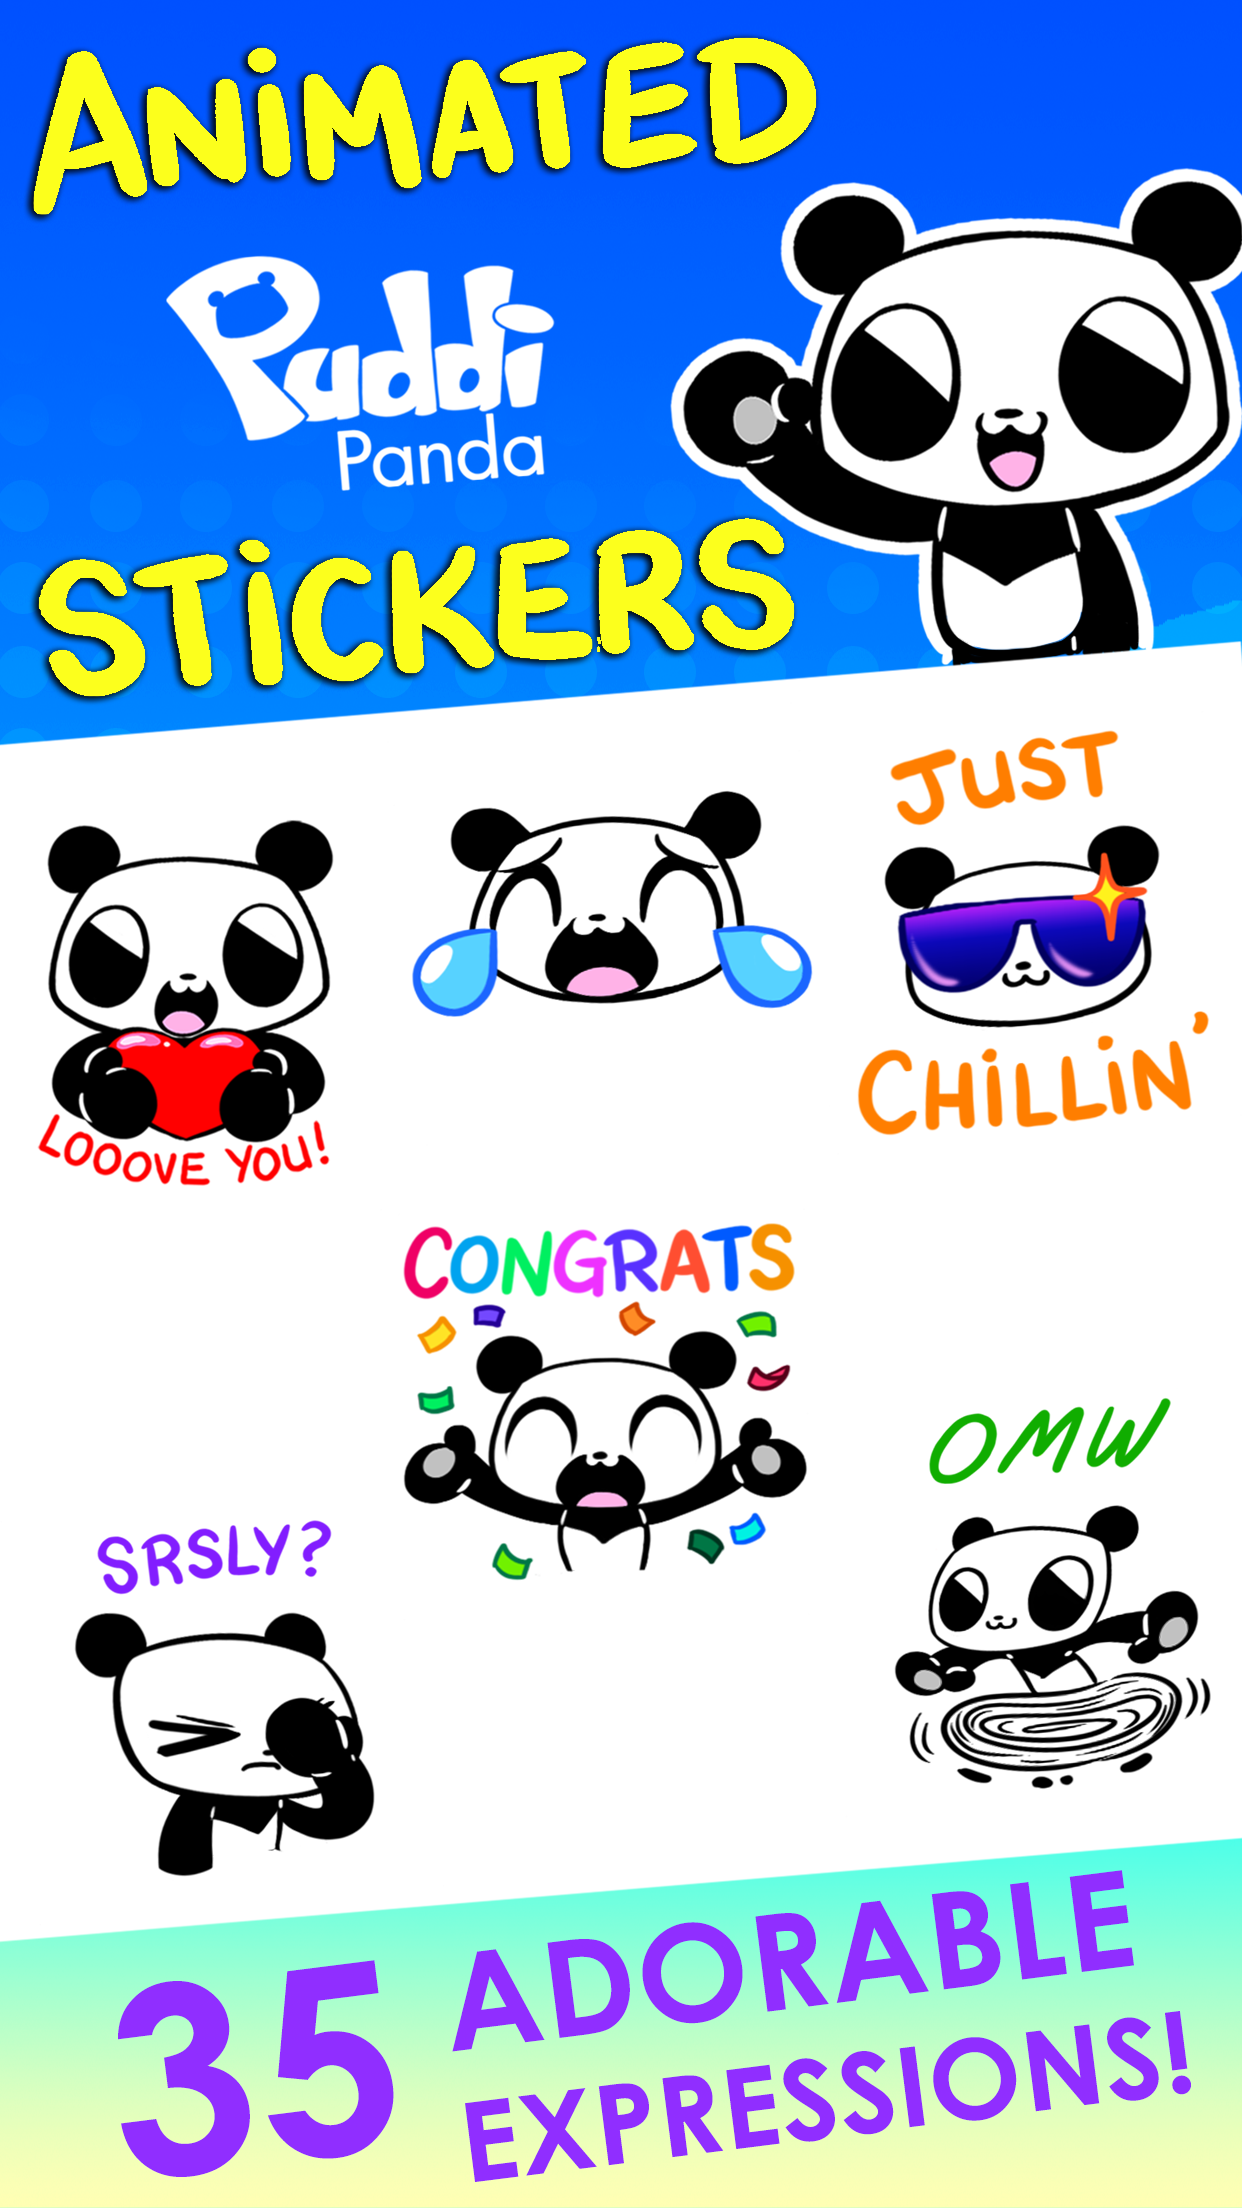 Animated Puddi 
						Panda Stickers screenshot. 35 adorable expressions!